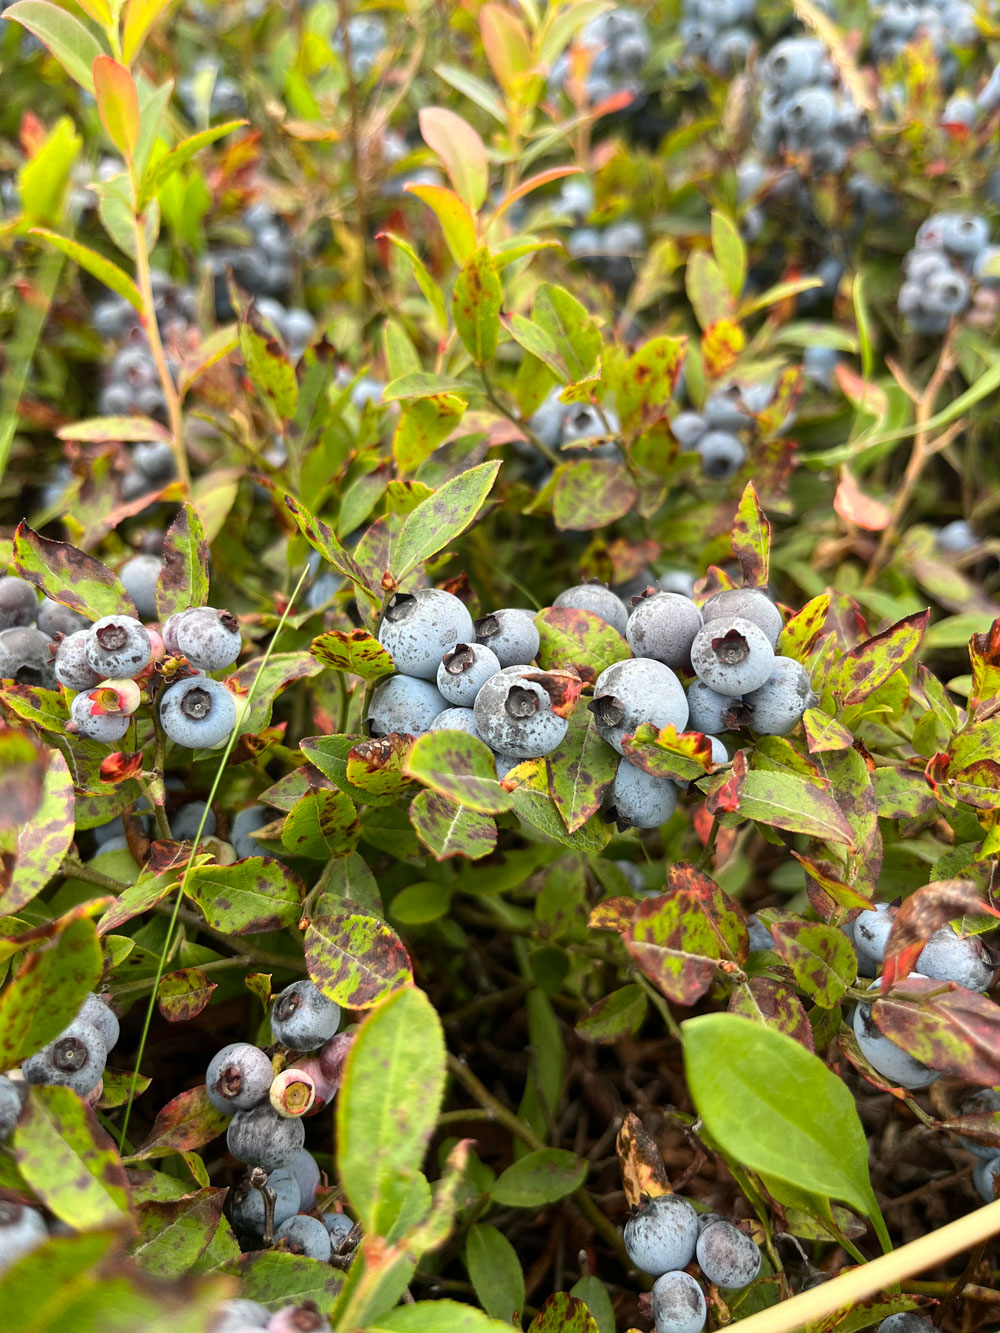 Wild blueberries on bushes